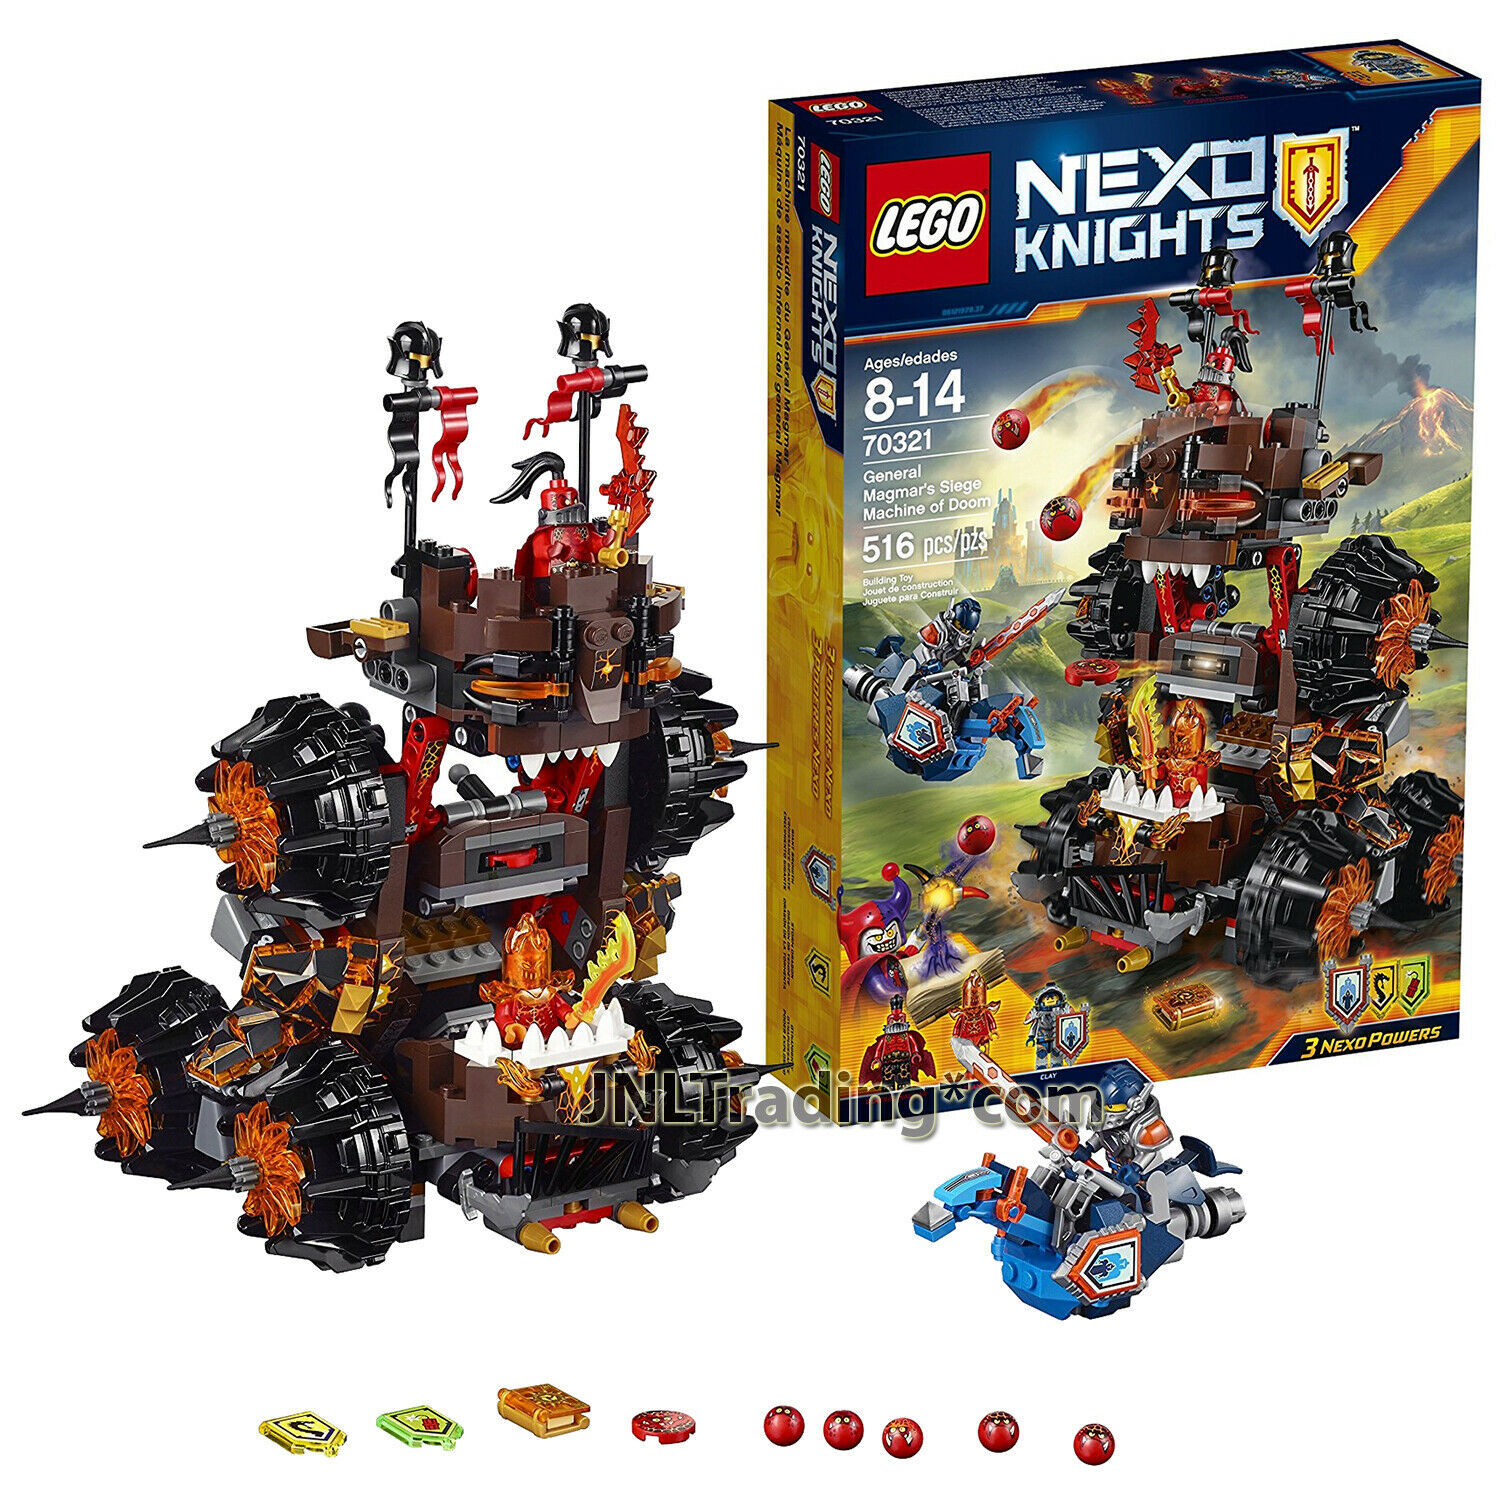 Primary image for Yr 2016 Lego Nexo Knights 70321 GENERAL MAGMAR'S SIEGE MACHINE OF DOOM (658 Pcs)